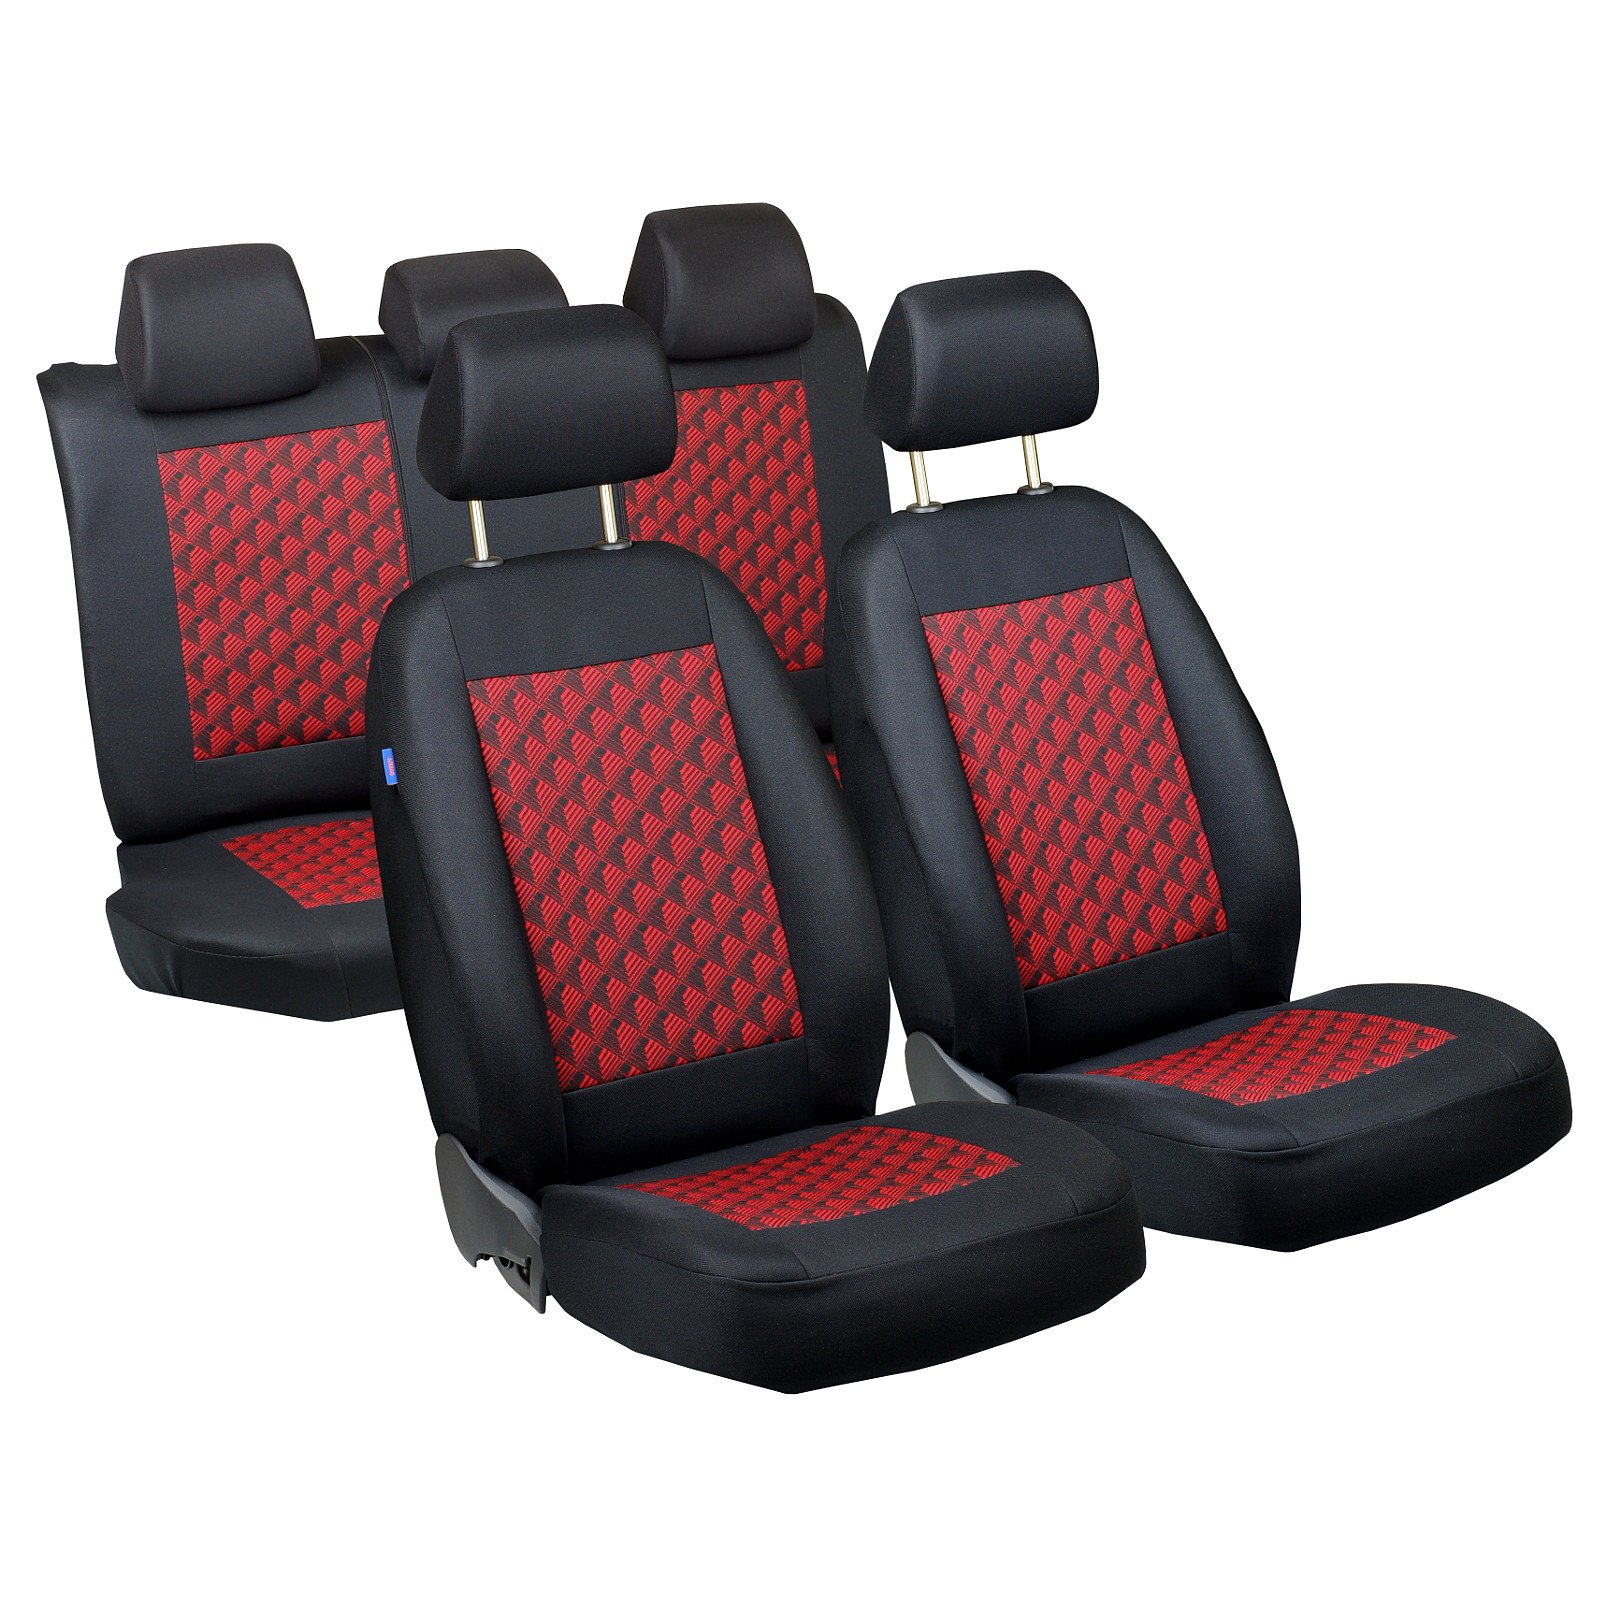 X5 Sitzbezüge - 1 Set - Farbe Premium Schwarz-rot Effekt 3D